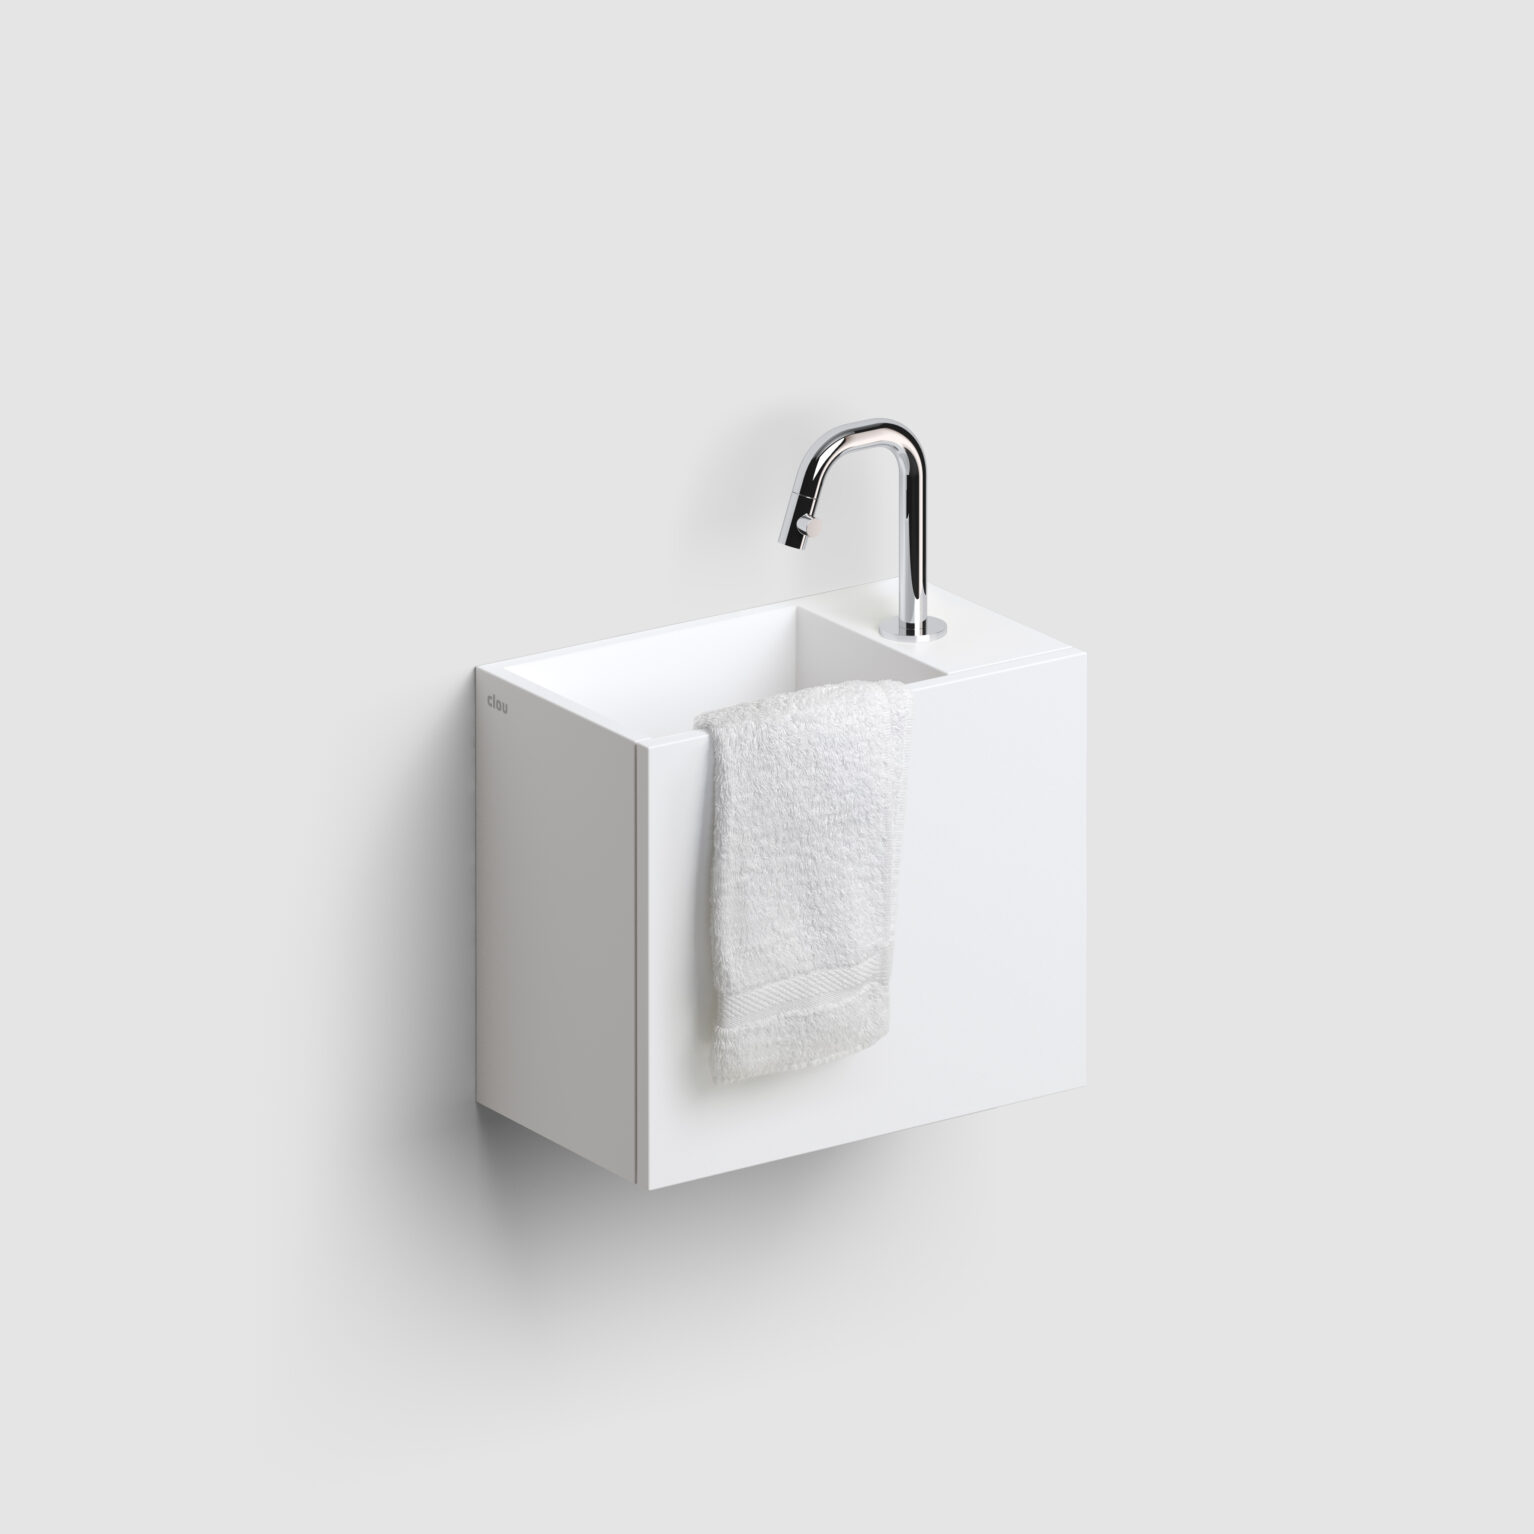 fontein-meubel-kastje-wit-toilet-badkamer-luxe-sanitair-Nifty-rechts-clou-CL03131120755R-mat-wit-aluite-gelakt-36cm-Flush-afvoerplug-handdoekhouder-Kaldur-fonteinkraan-matwit-CL060500129R-towel